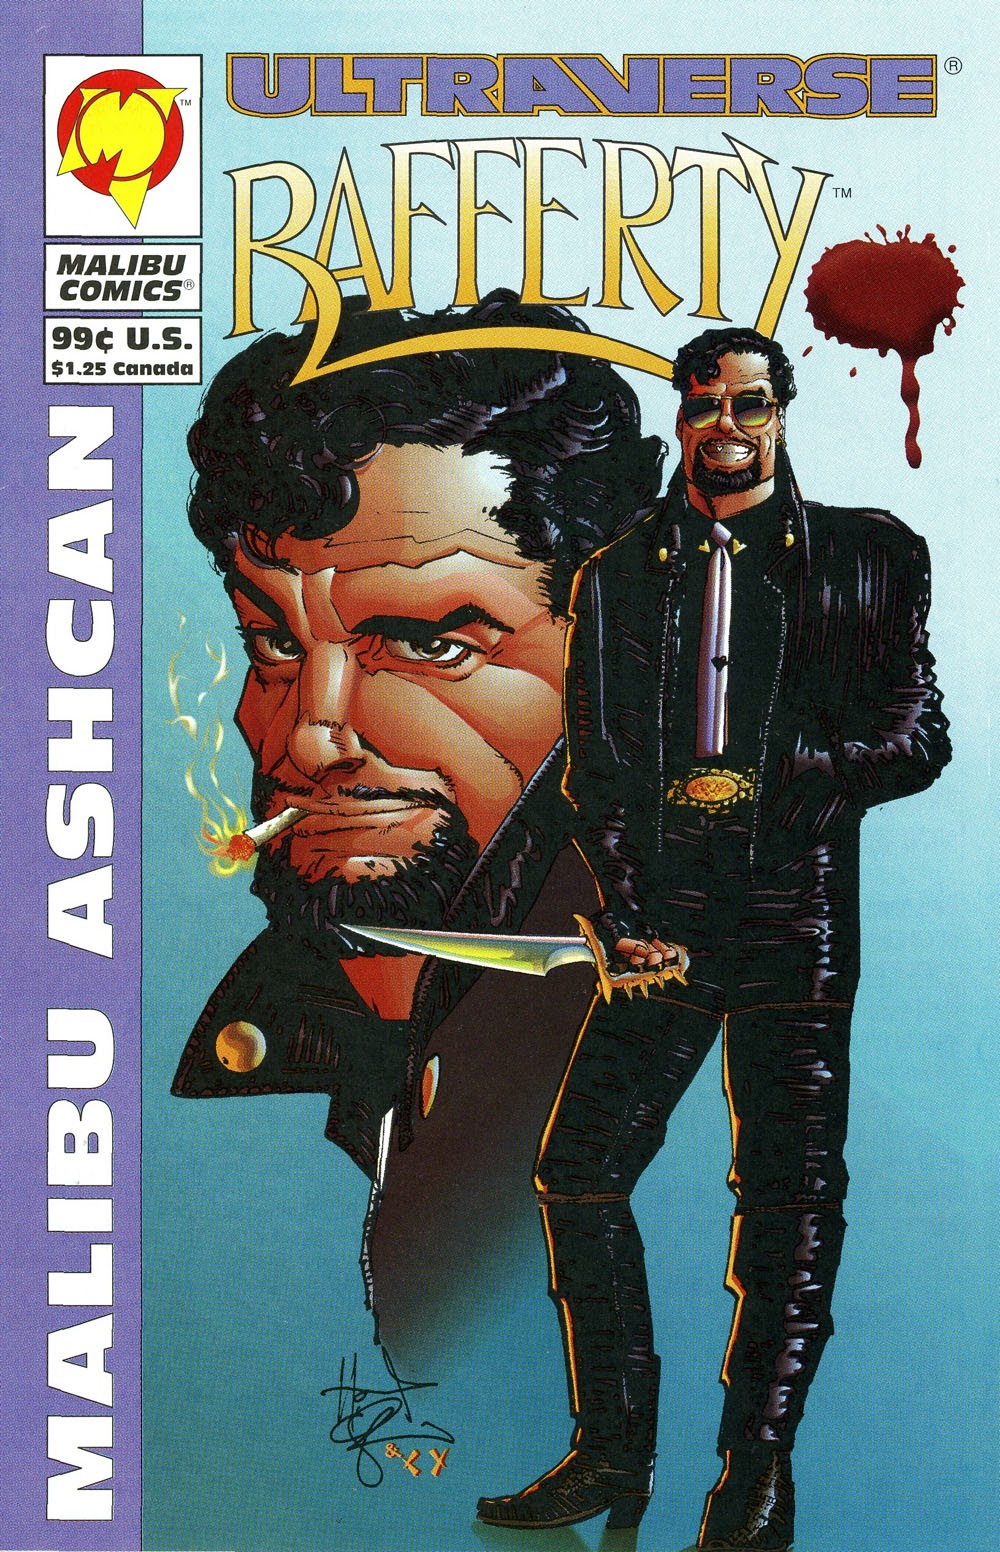 Read online Malibu Ashcan: Rafferty comic -  Issue # Full - 1